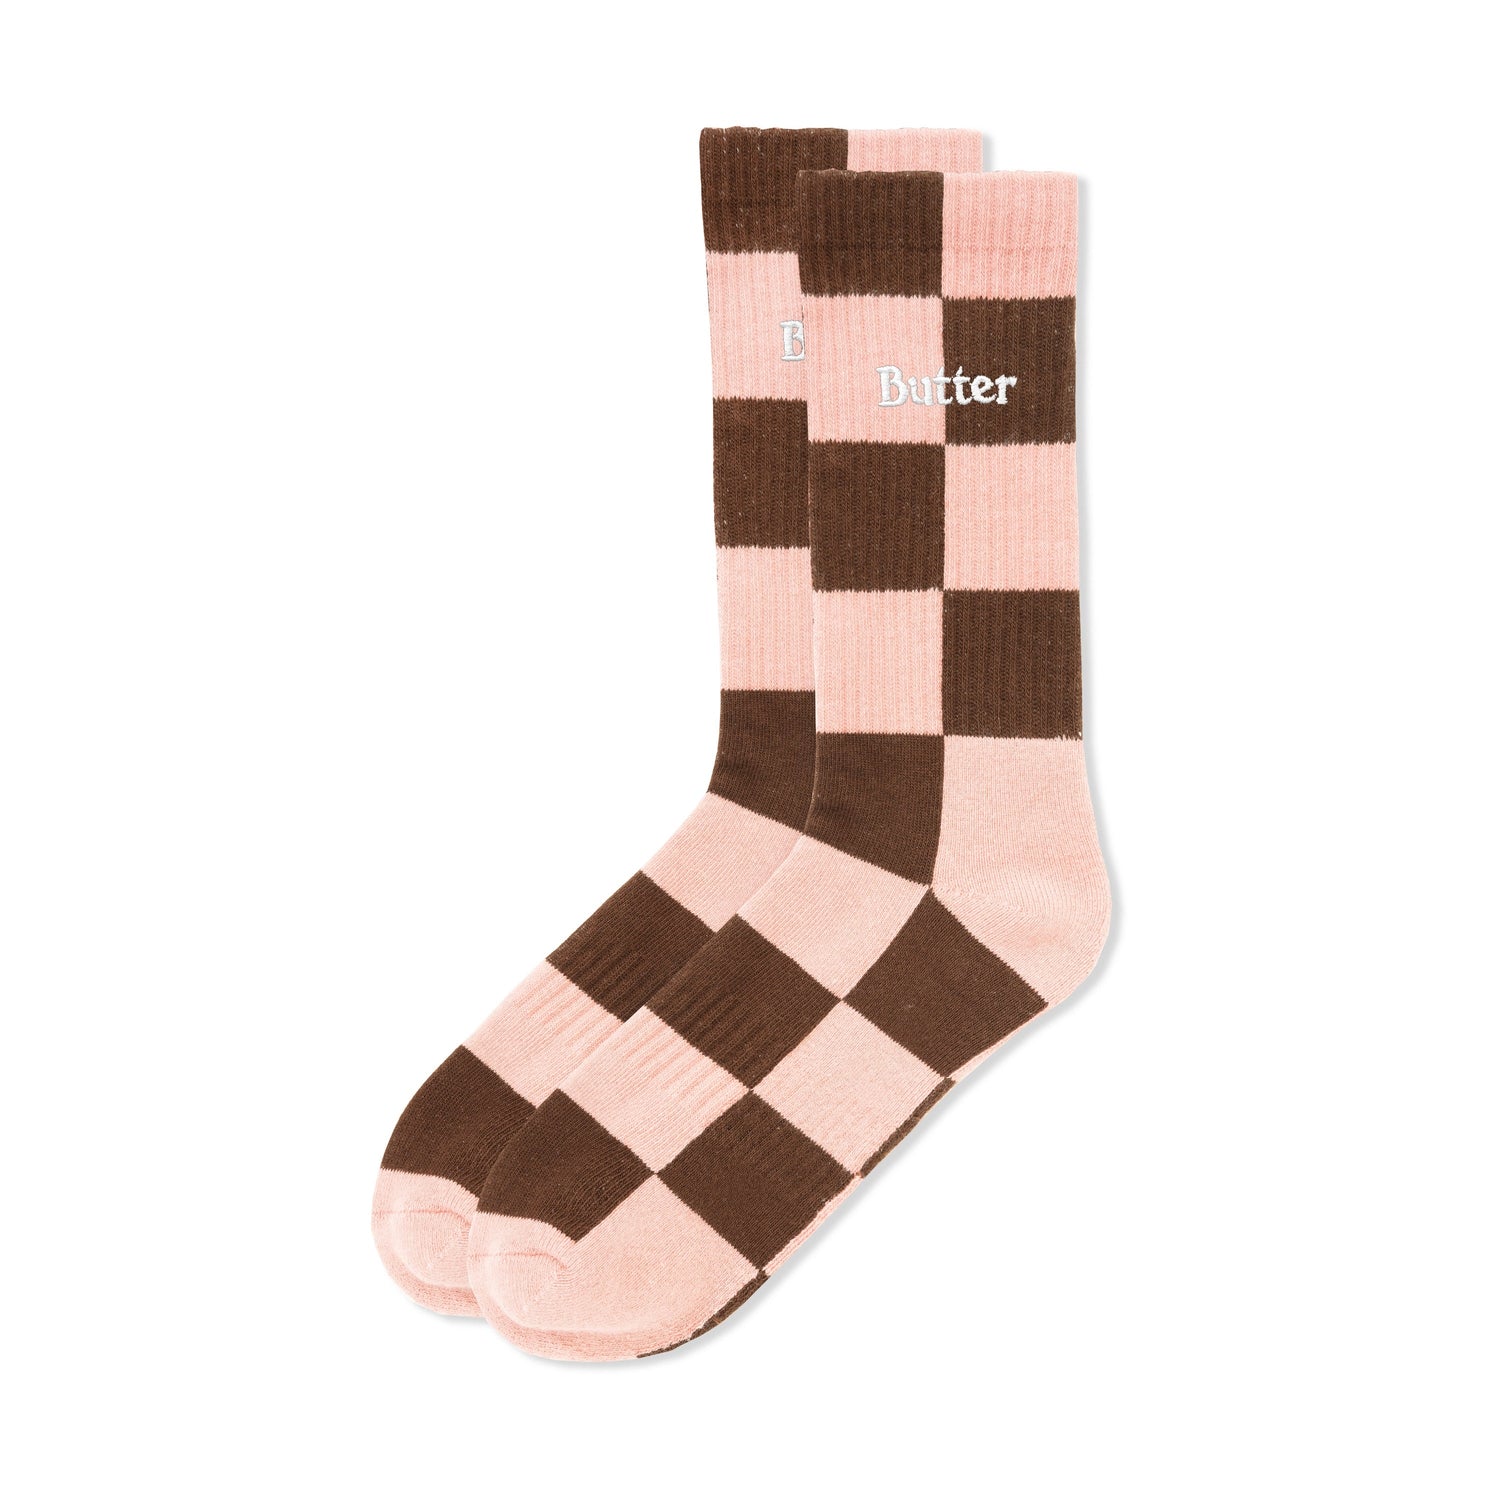 Checkered Socks, Brown / Pink